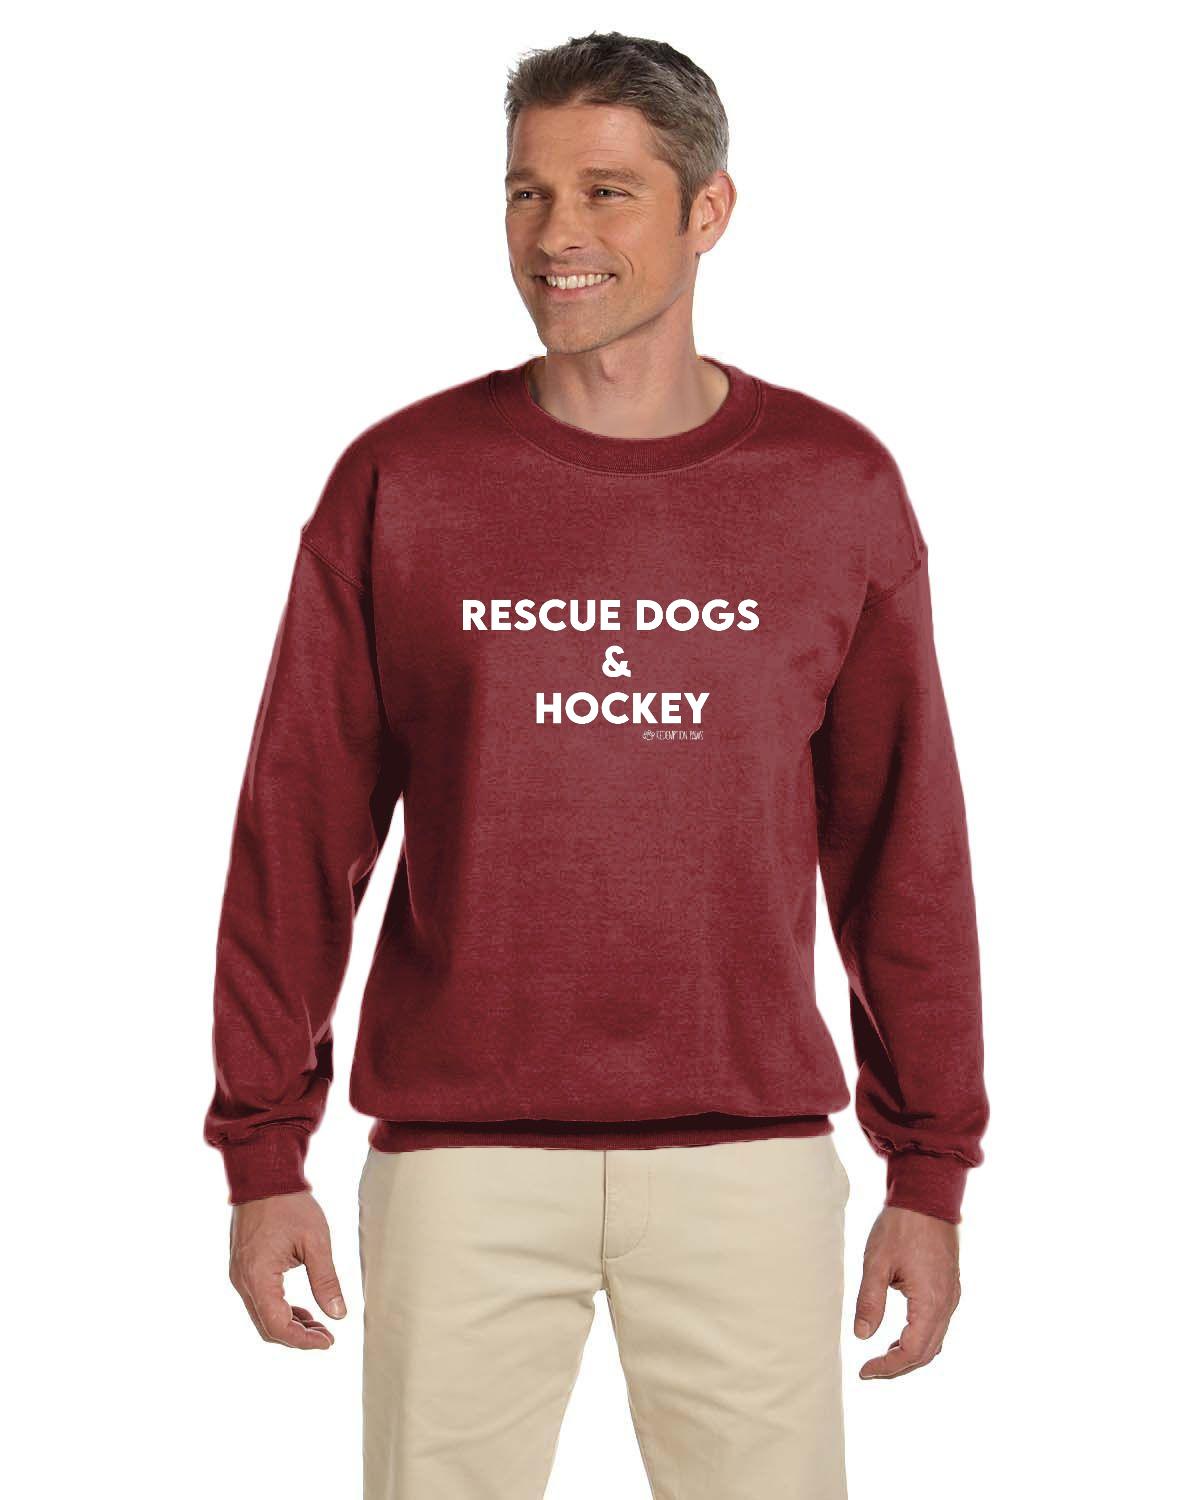 Rescue Dogs and Hockey Sweatshirt